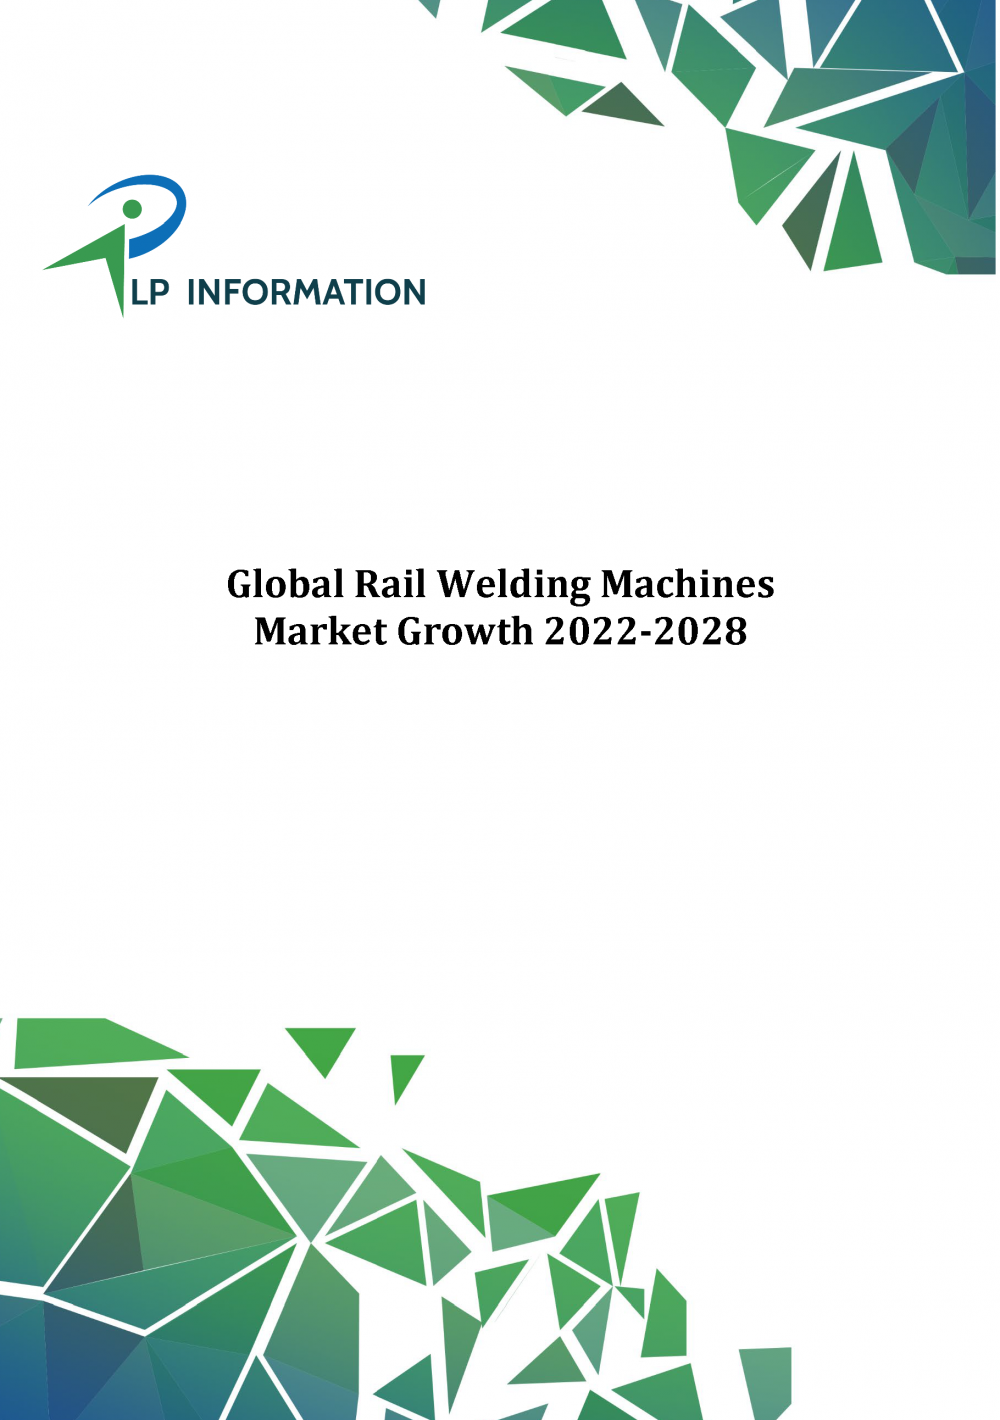 Global Rail Welding Machines Market Growth 2022-2028